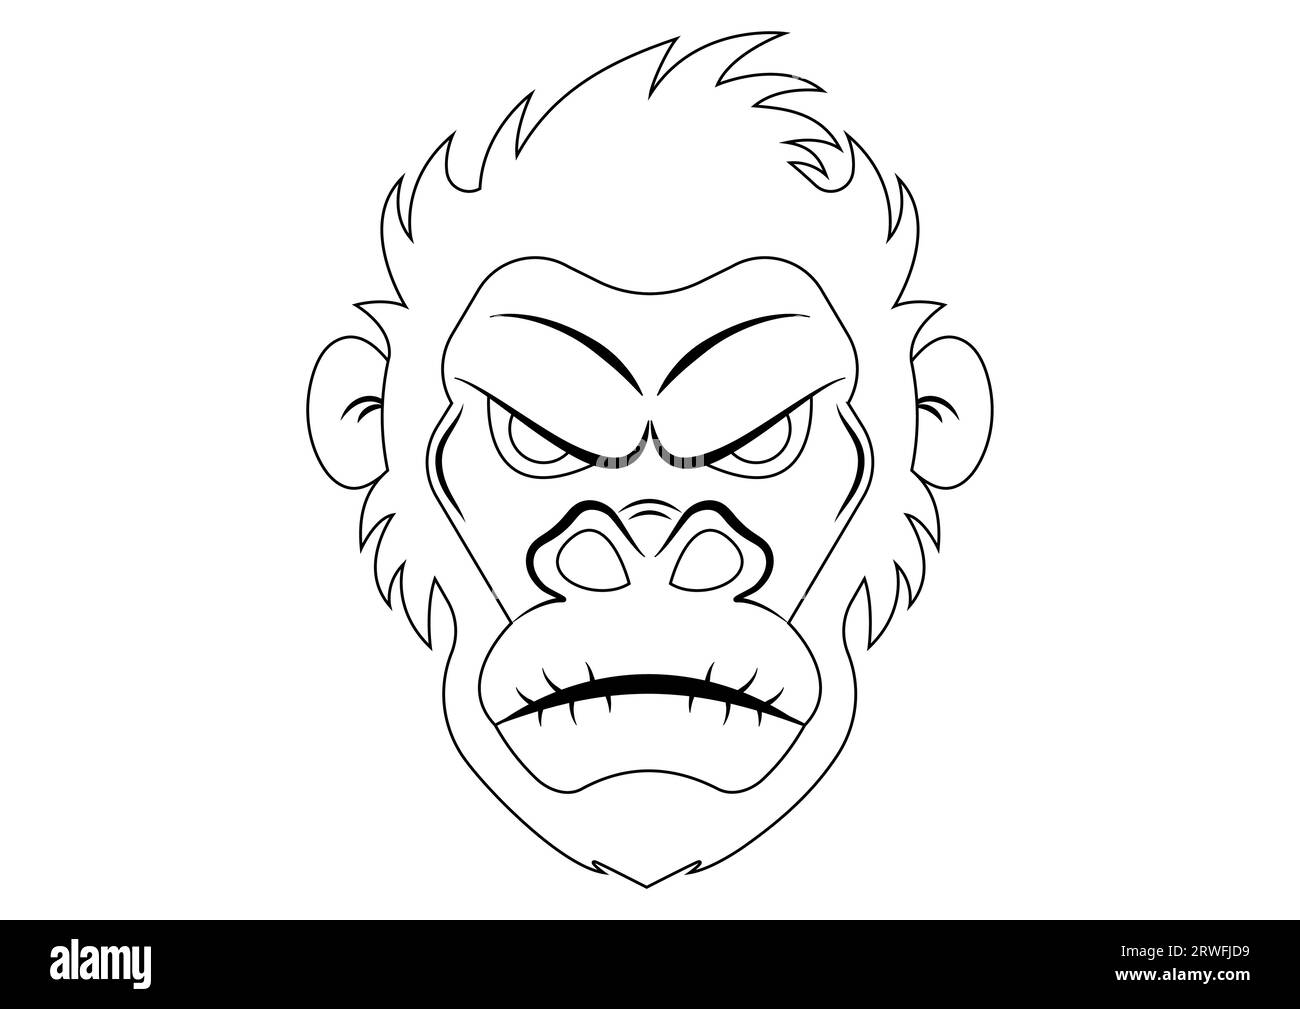 Black and White Gorilla Head Cartoon Vector. Coloring Page of a Gorilla Head Stock Vector